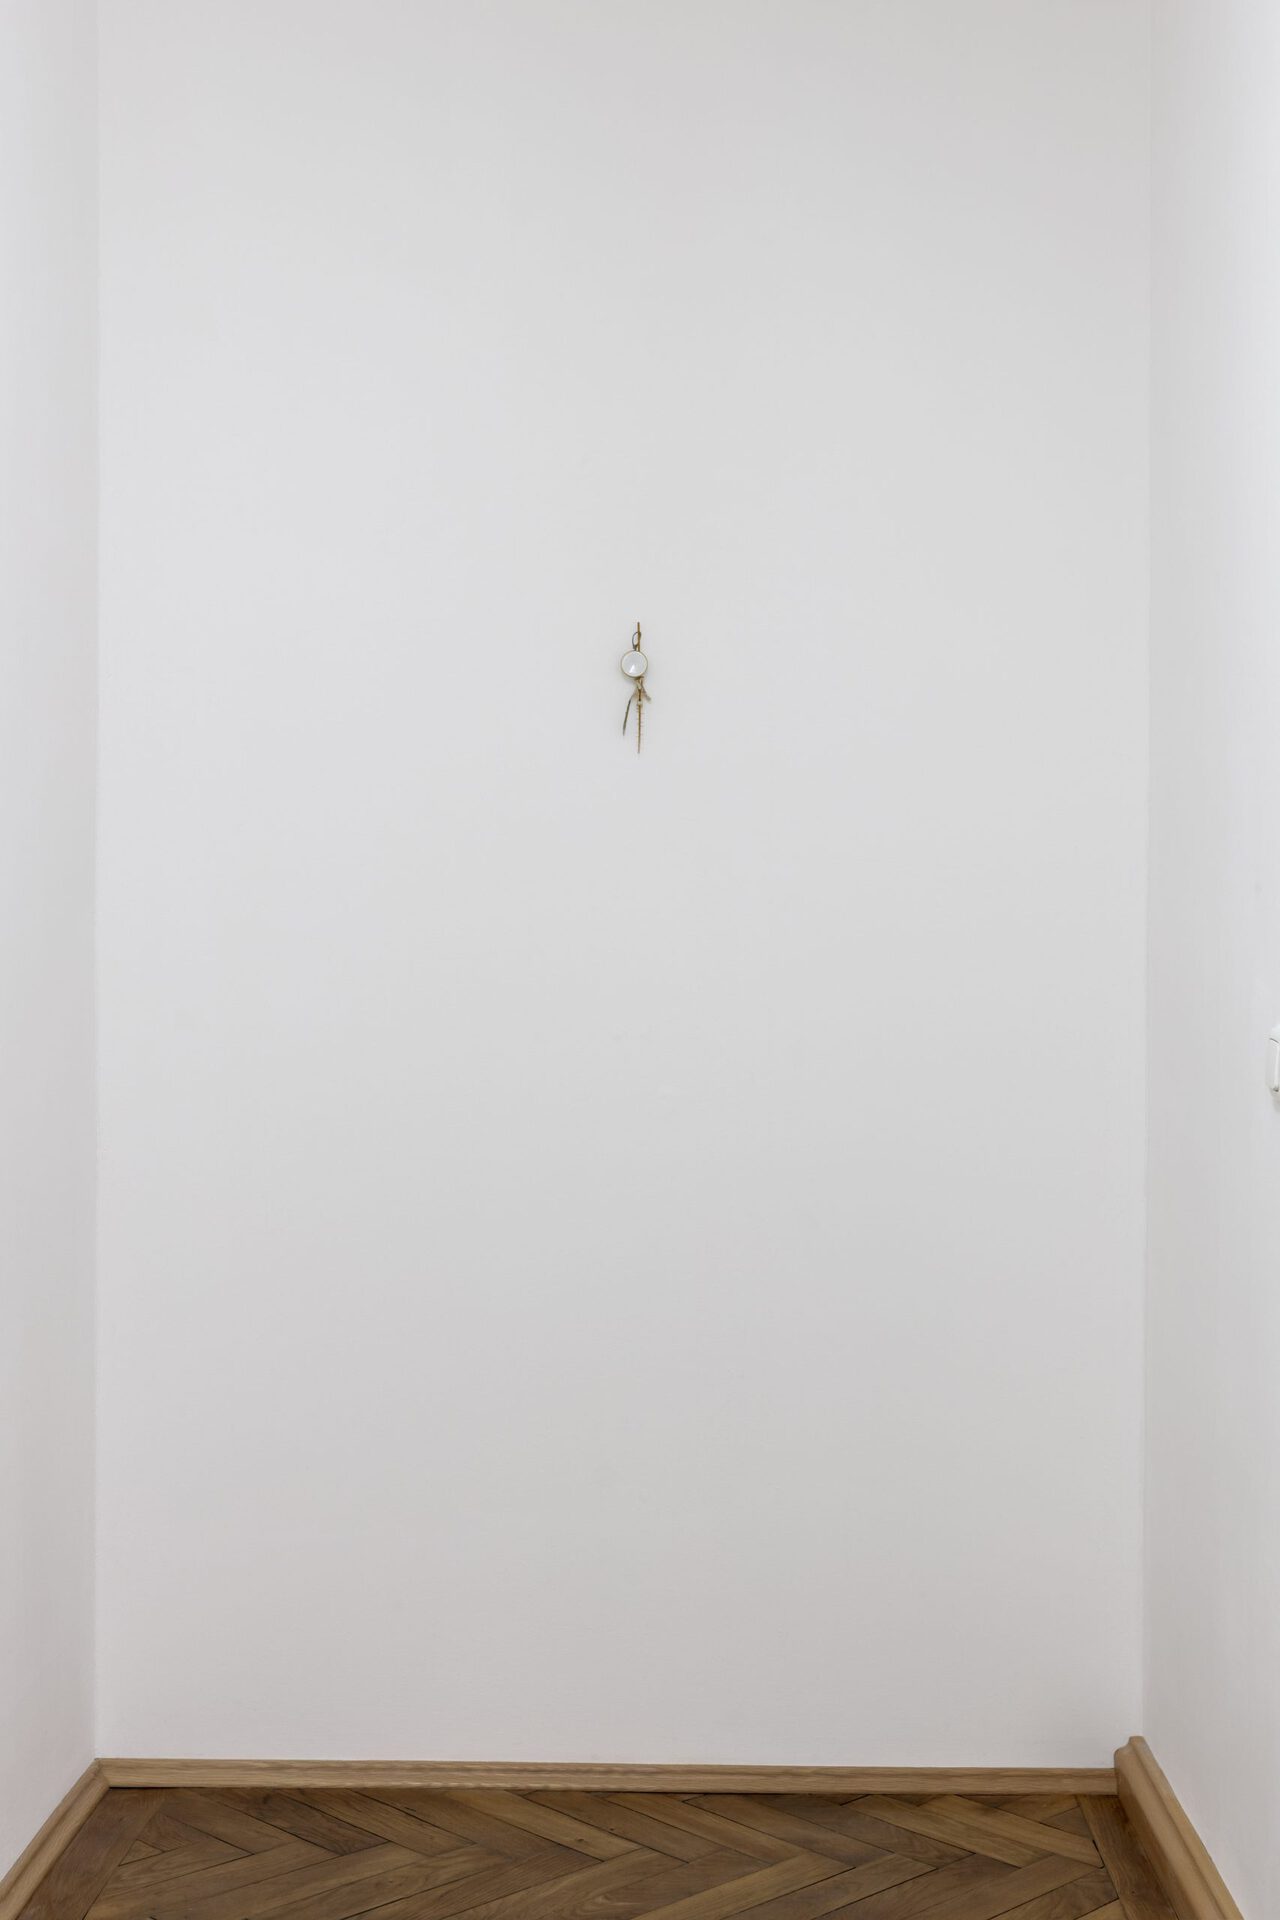 David Fesl, Untitled, 2022, plastic, plastic comb, oak skewer, porcelain teapot knob, tin lid, mechanical pencil refill, 18 × 4.2 × 1.9 cm